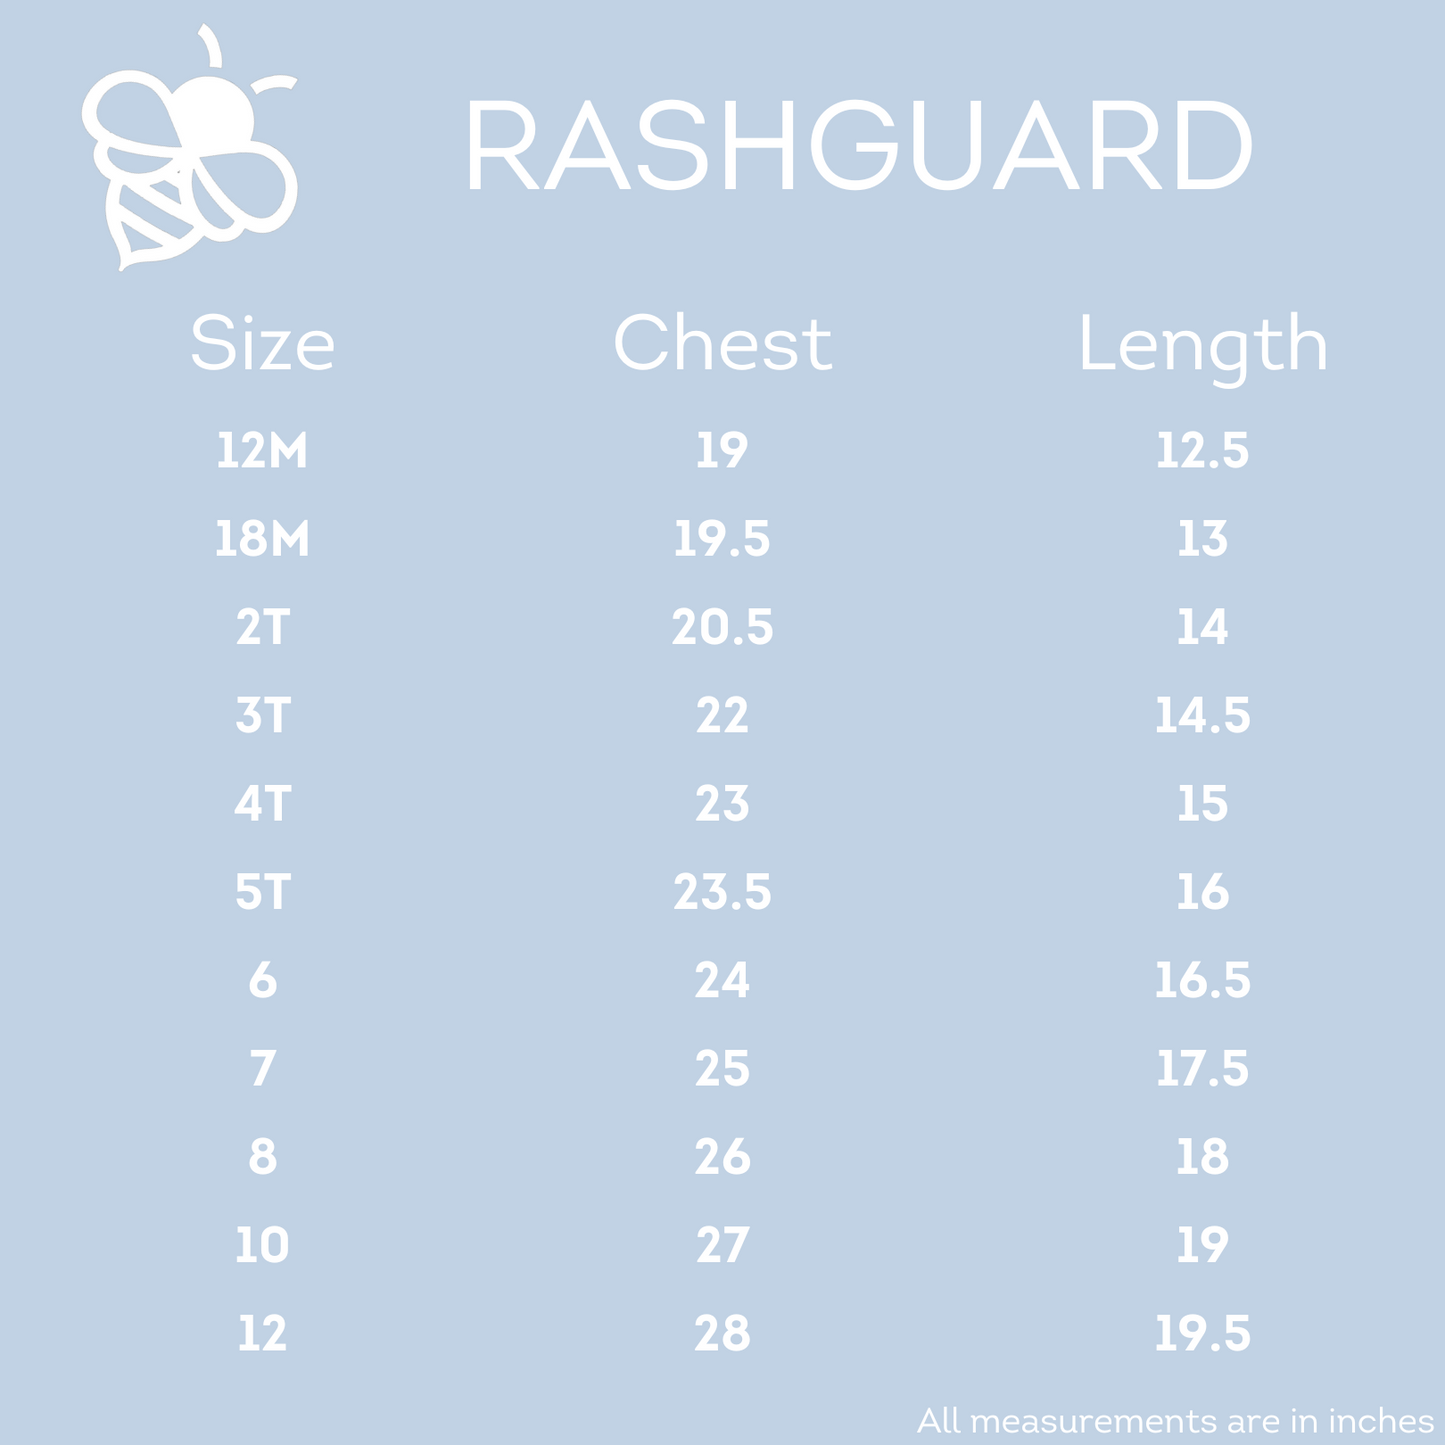 Rashguard - Turquoise Gingham